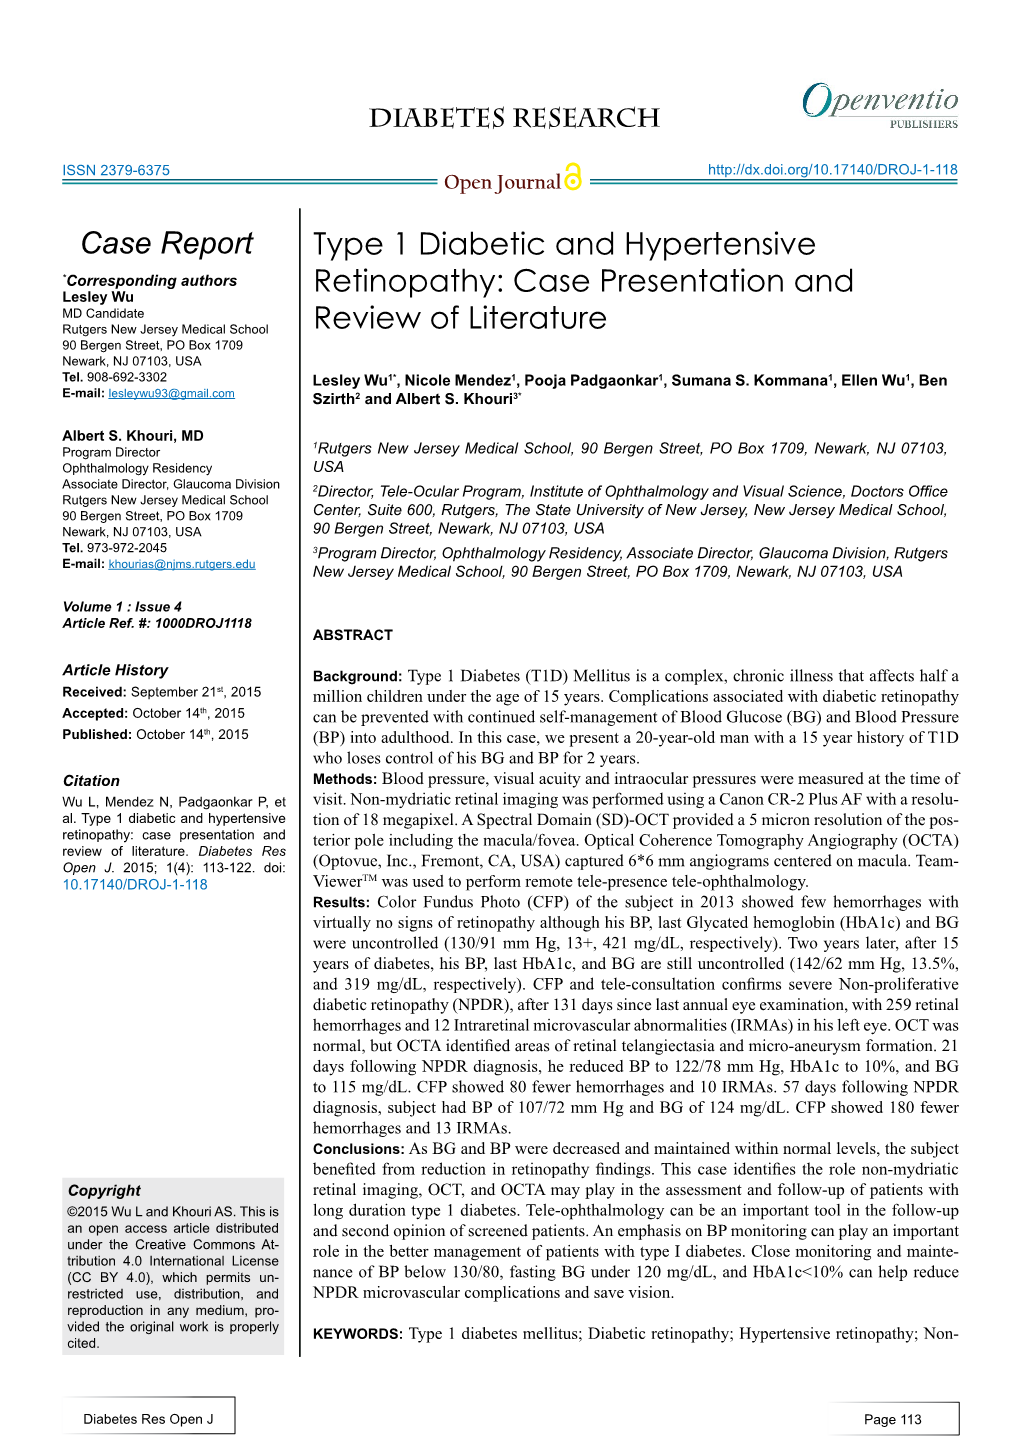 Type 1 Diabetic and Hypertensive Retinopathy